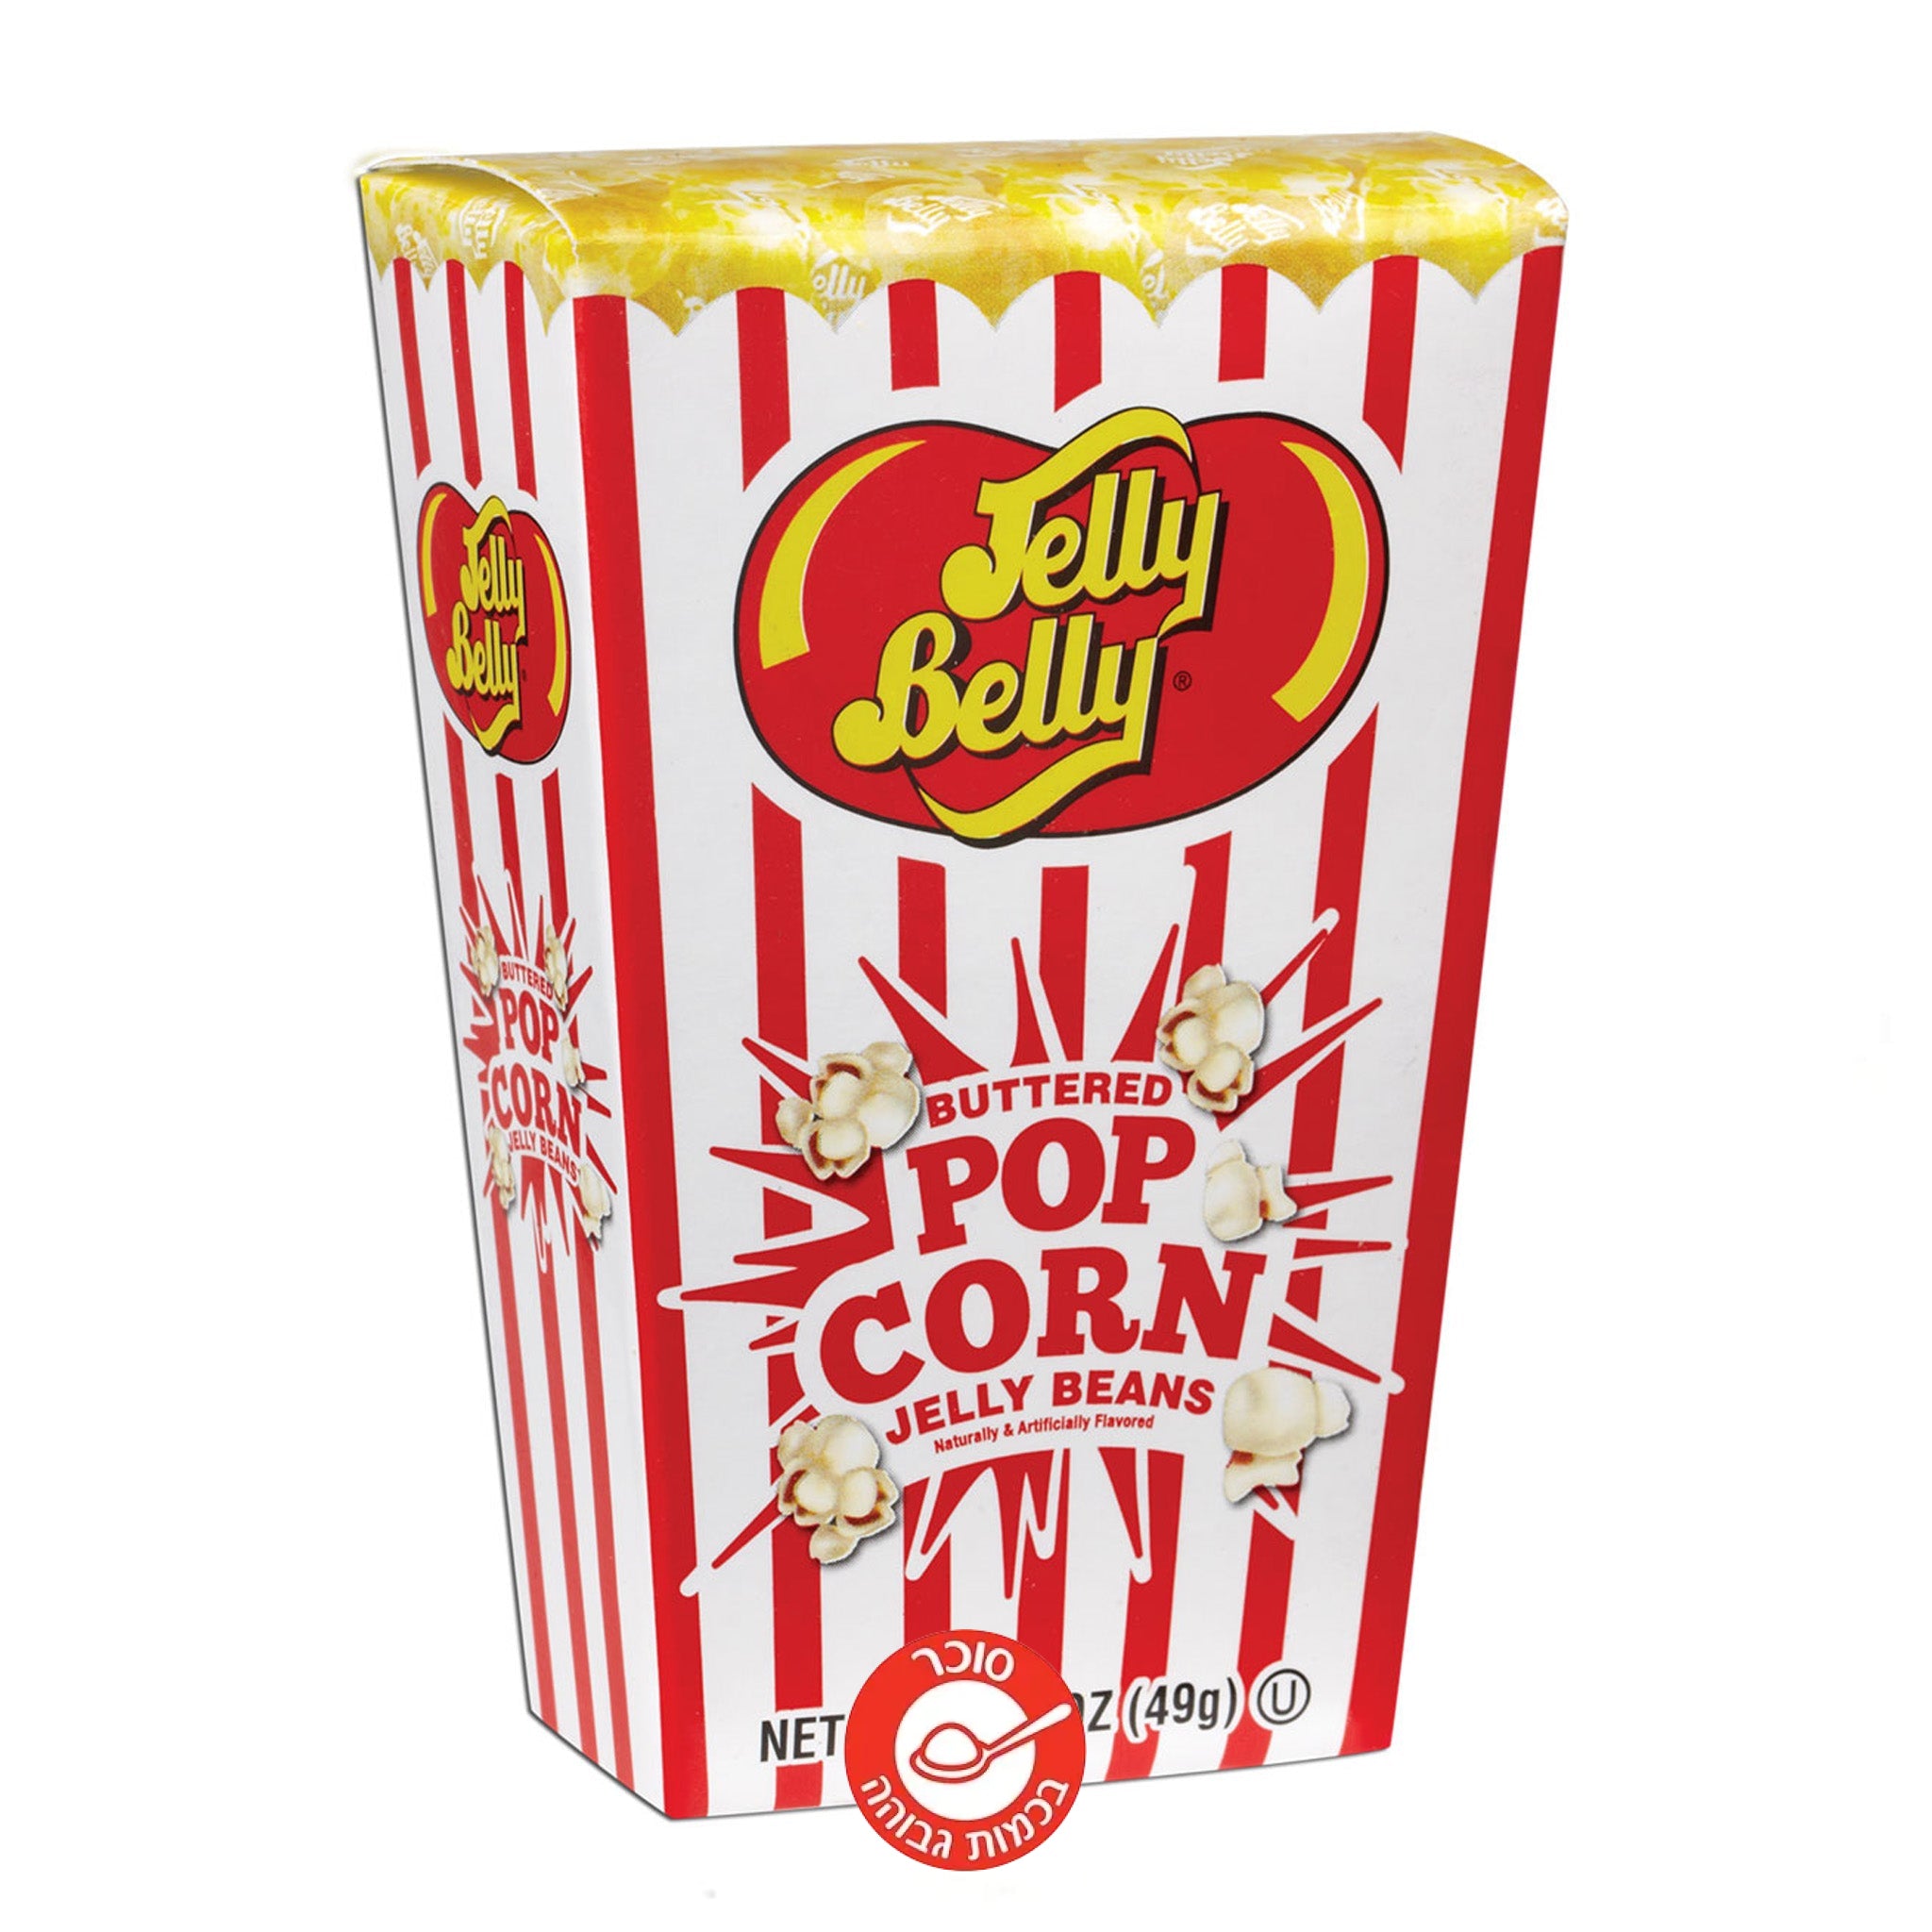 Jelly Belly Popcorn Flavored Jelly Beans ג'לי בלי סוכריות ג'לי בטעם פופקורן חמאה